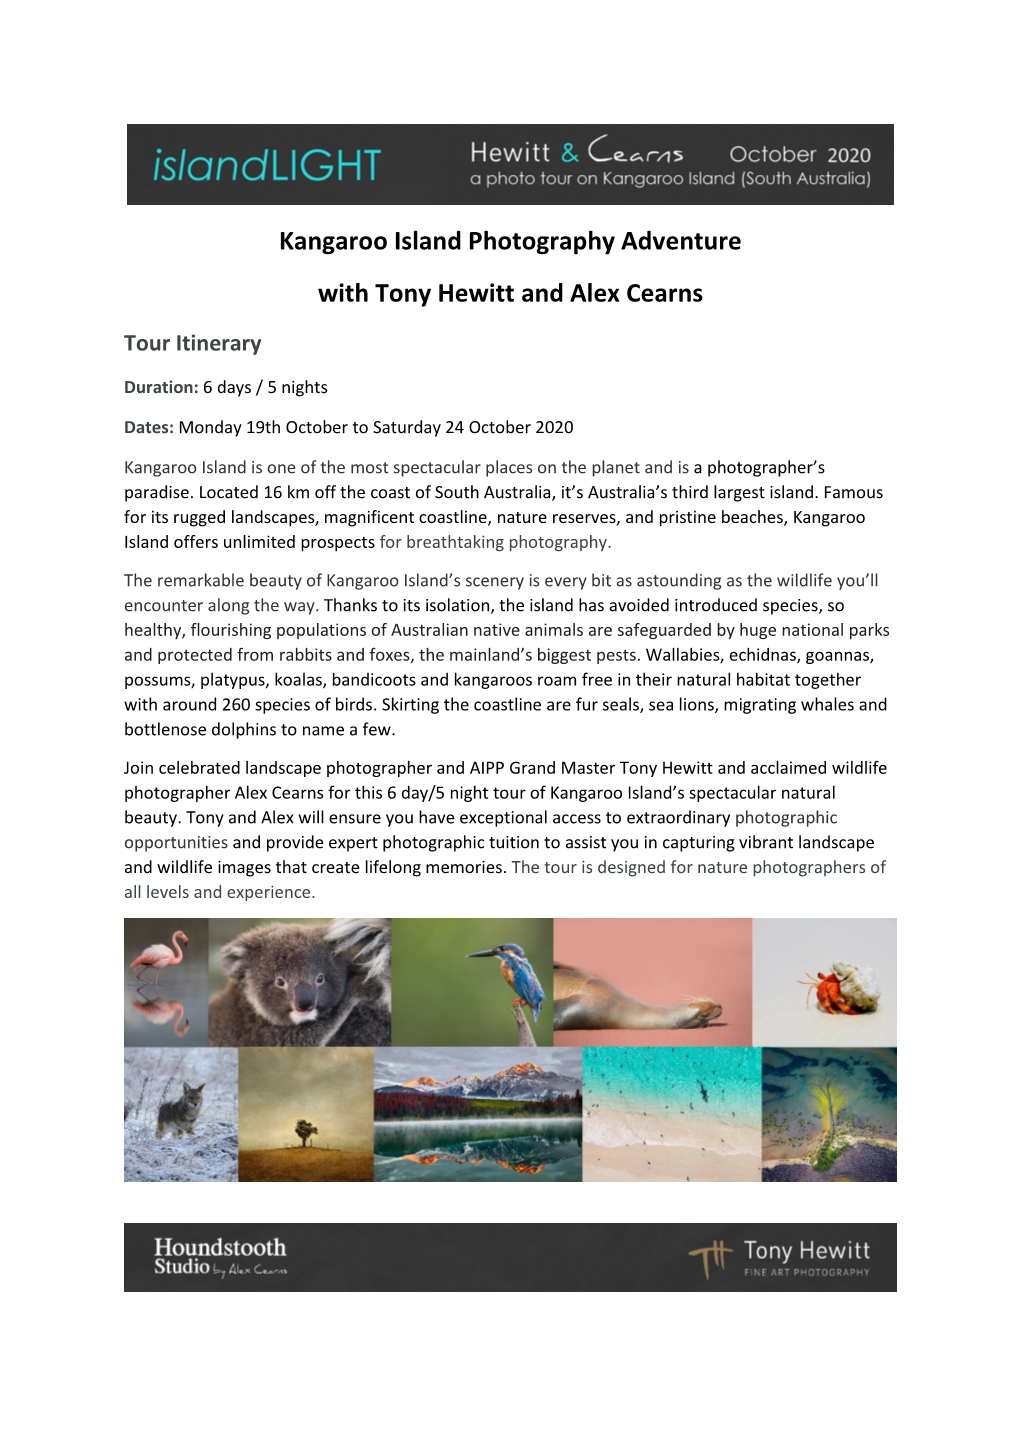 Kangaroo Island Photography Adventure with Tony Hewitt and Alex Cearns